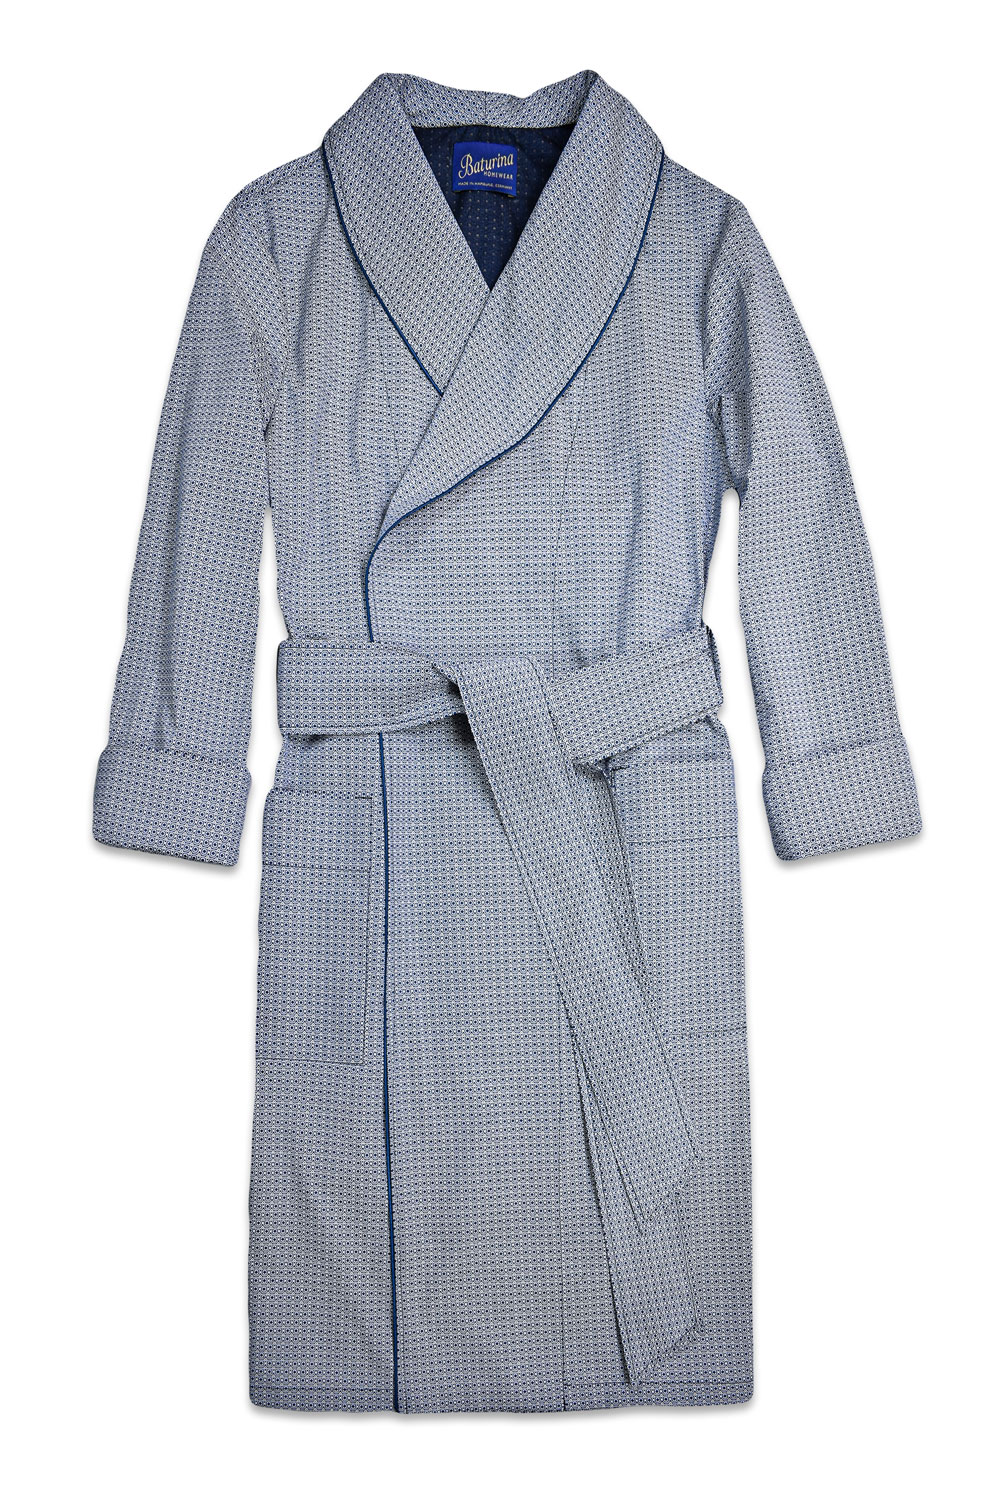 Mens Dressing Gown Gowns Robe Cotton rich kimono gents Summer Lightweight |  eBay